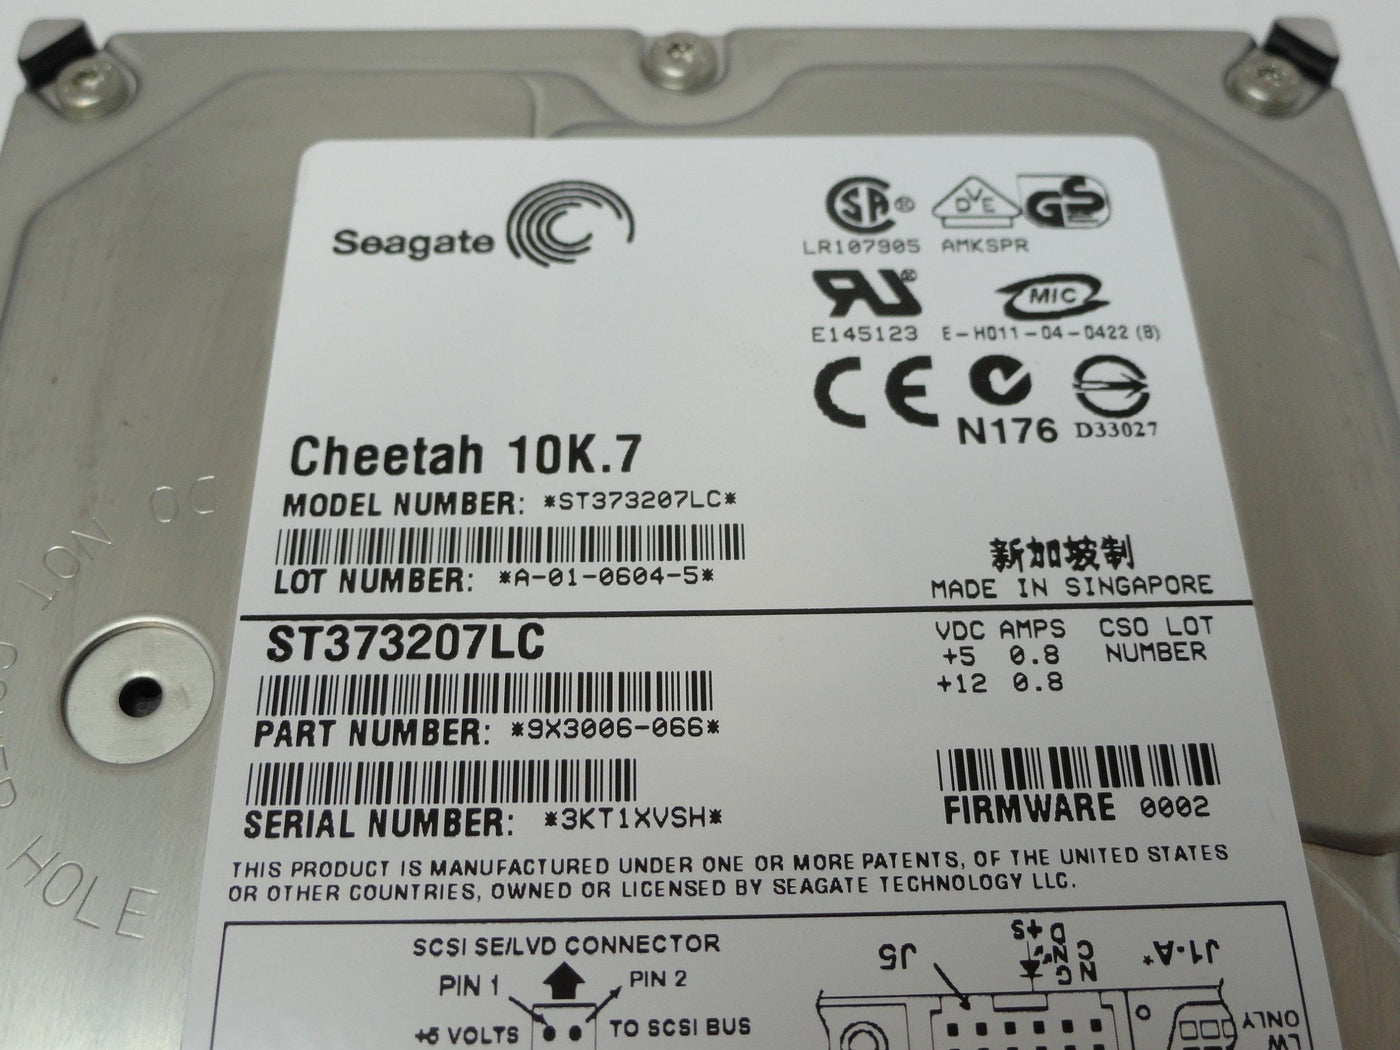 9X3006-066 - Seagate 73GB SCSI 80 Pin 10Krpm 3.5in Cheetah 10K.7 HDD - Refurbished